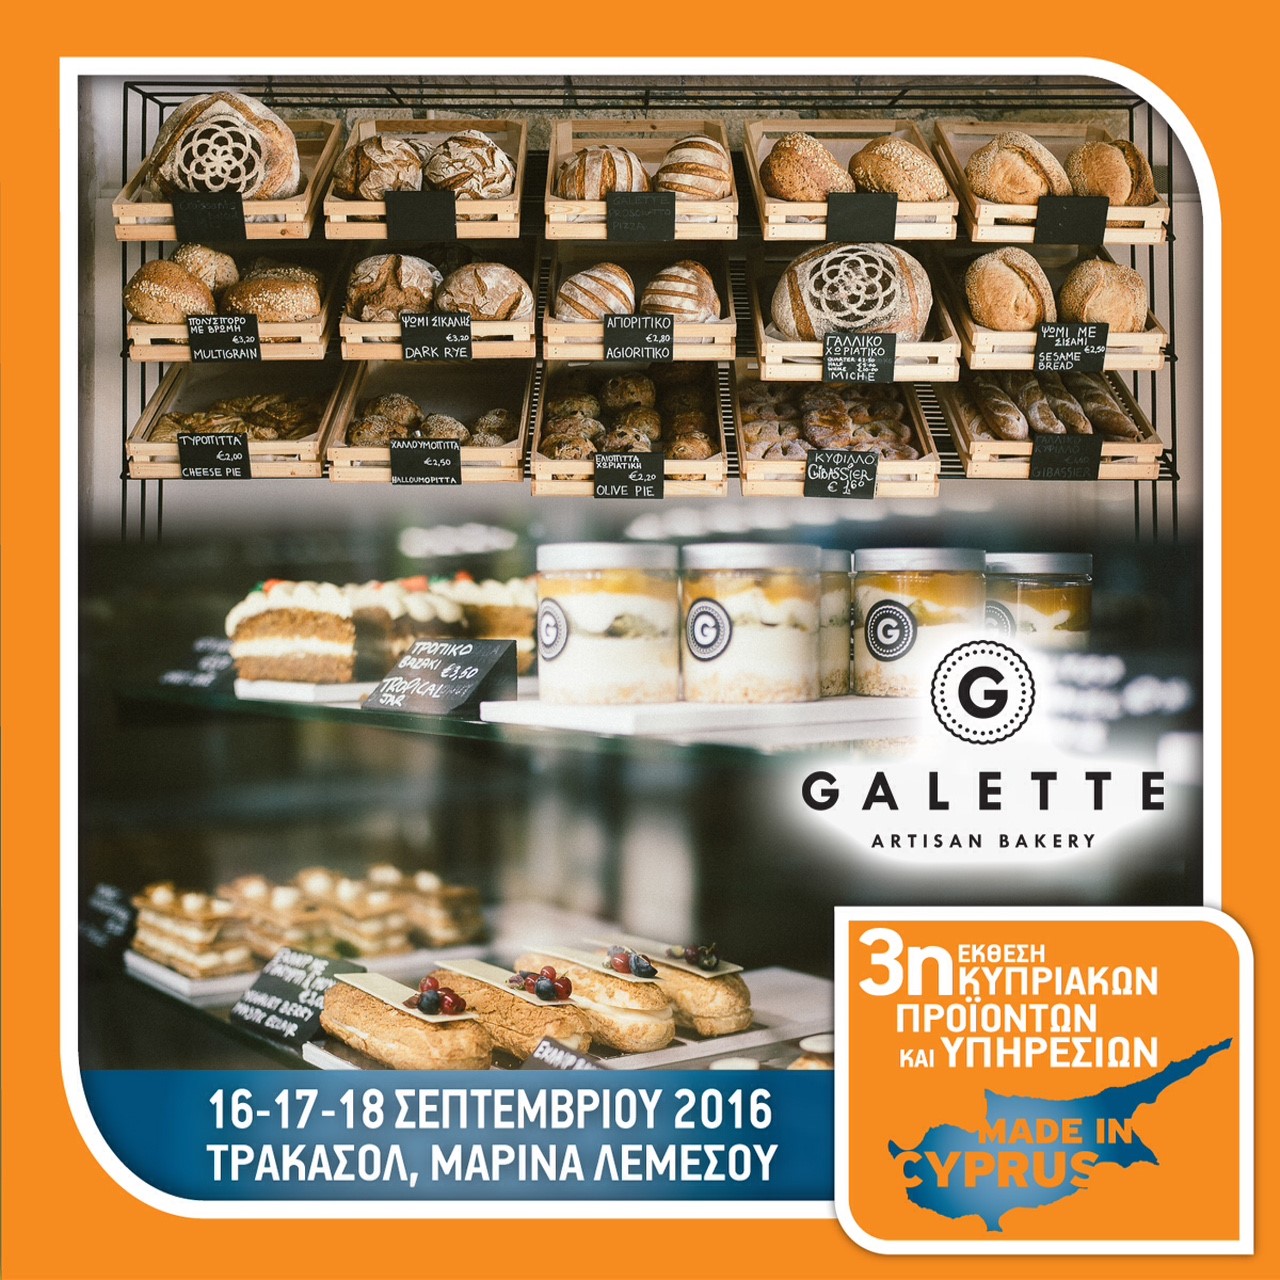 Gallete Artisan Bakery - Stand No 59